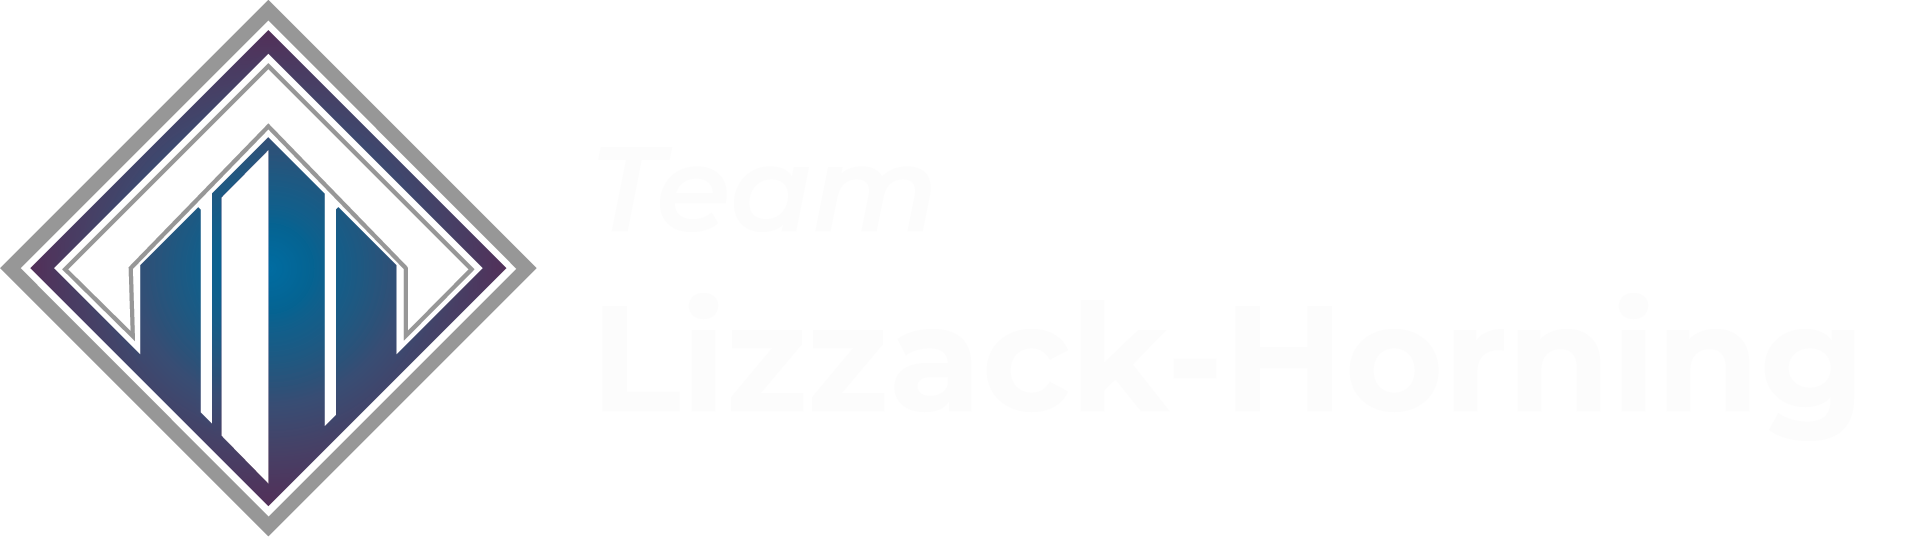 Team Lizzack Horning